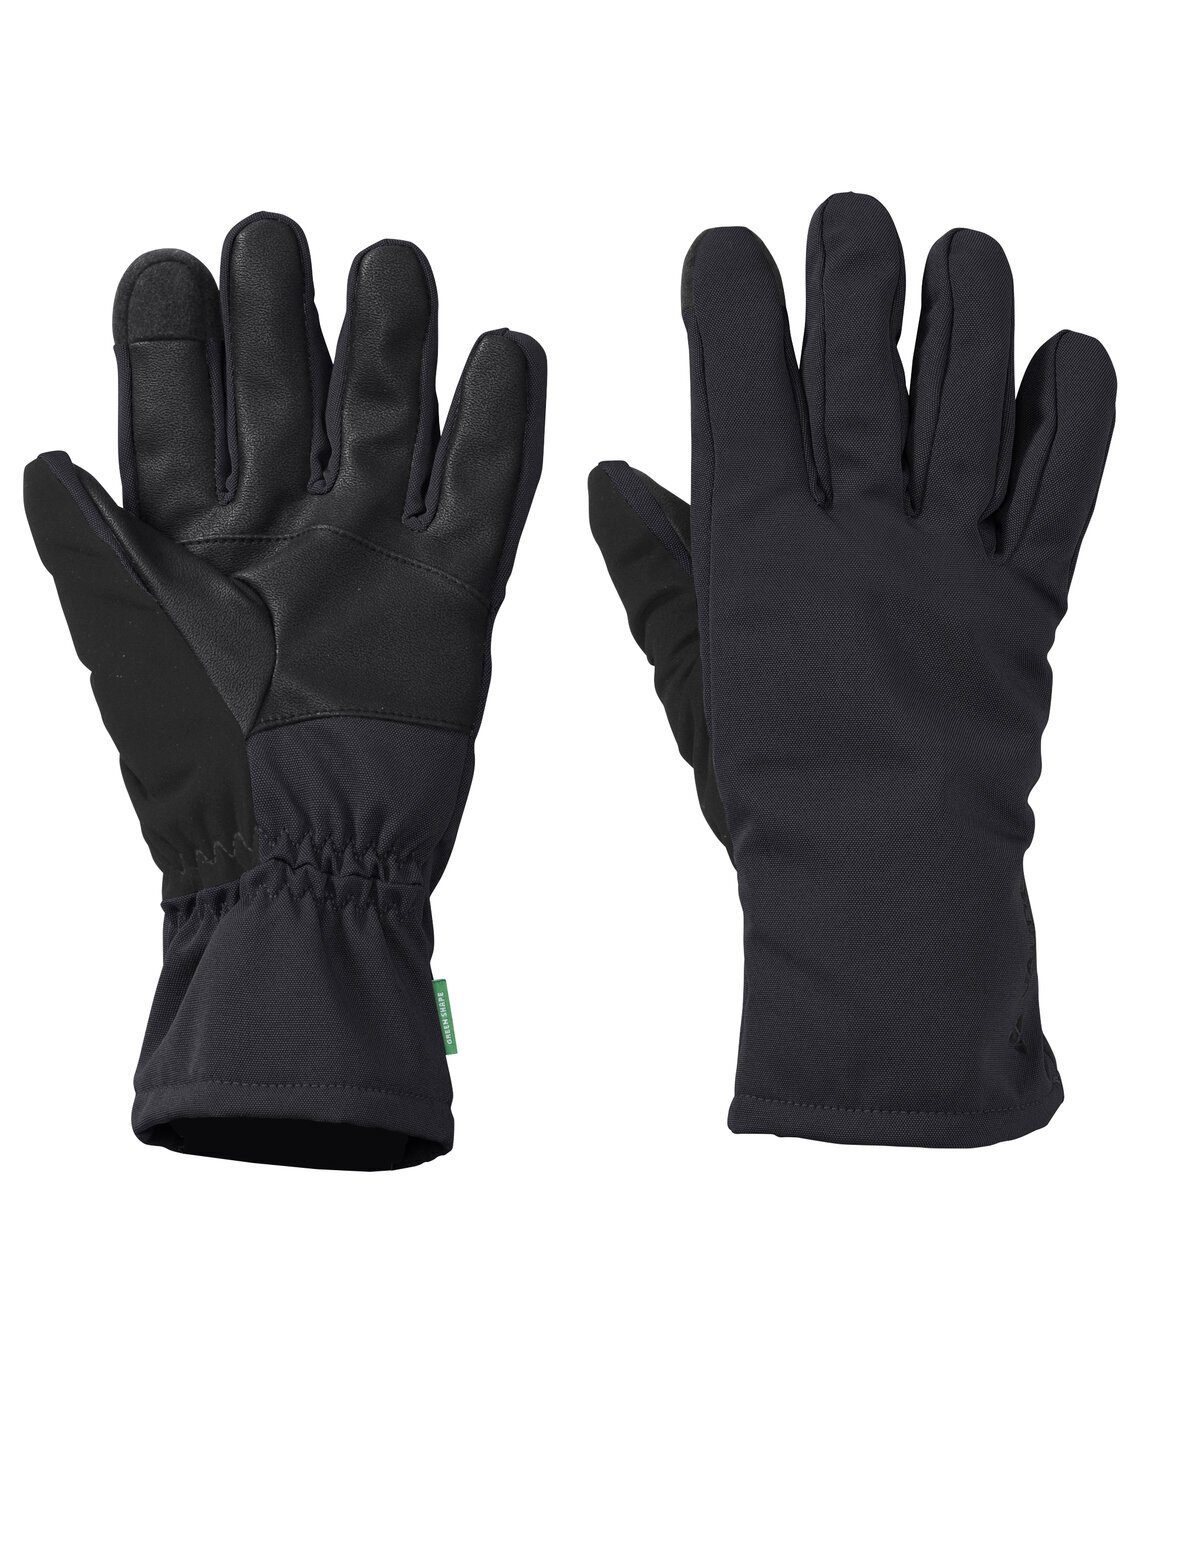 VAUDE Manukau black Multisporthandschuhe Gloves